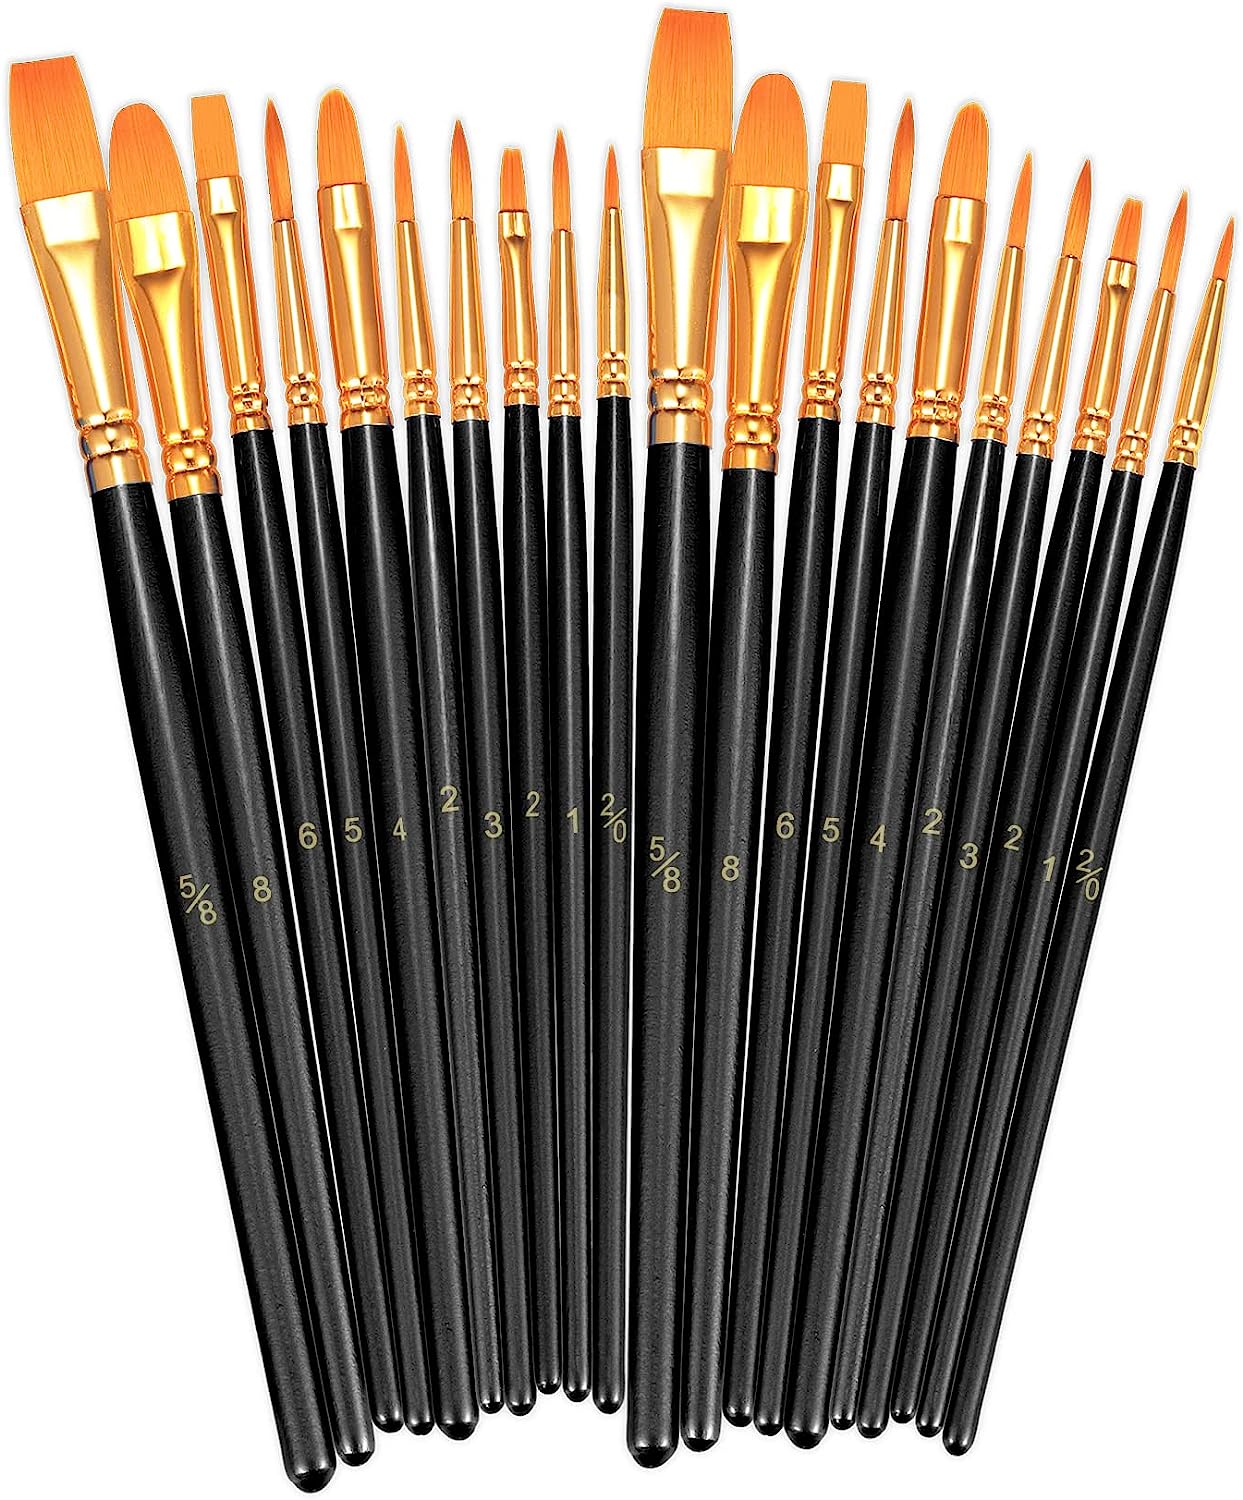 BOSOBO Paint Brushes Set, 2 Pack 20 Pcs Round Pointed [...]